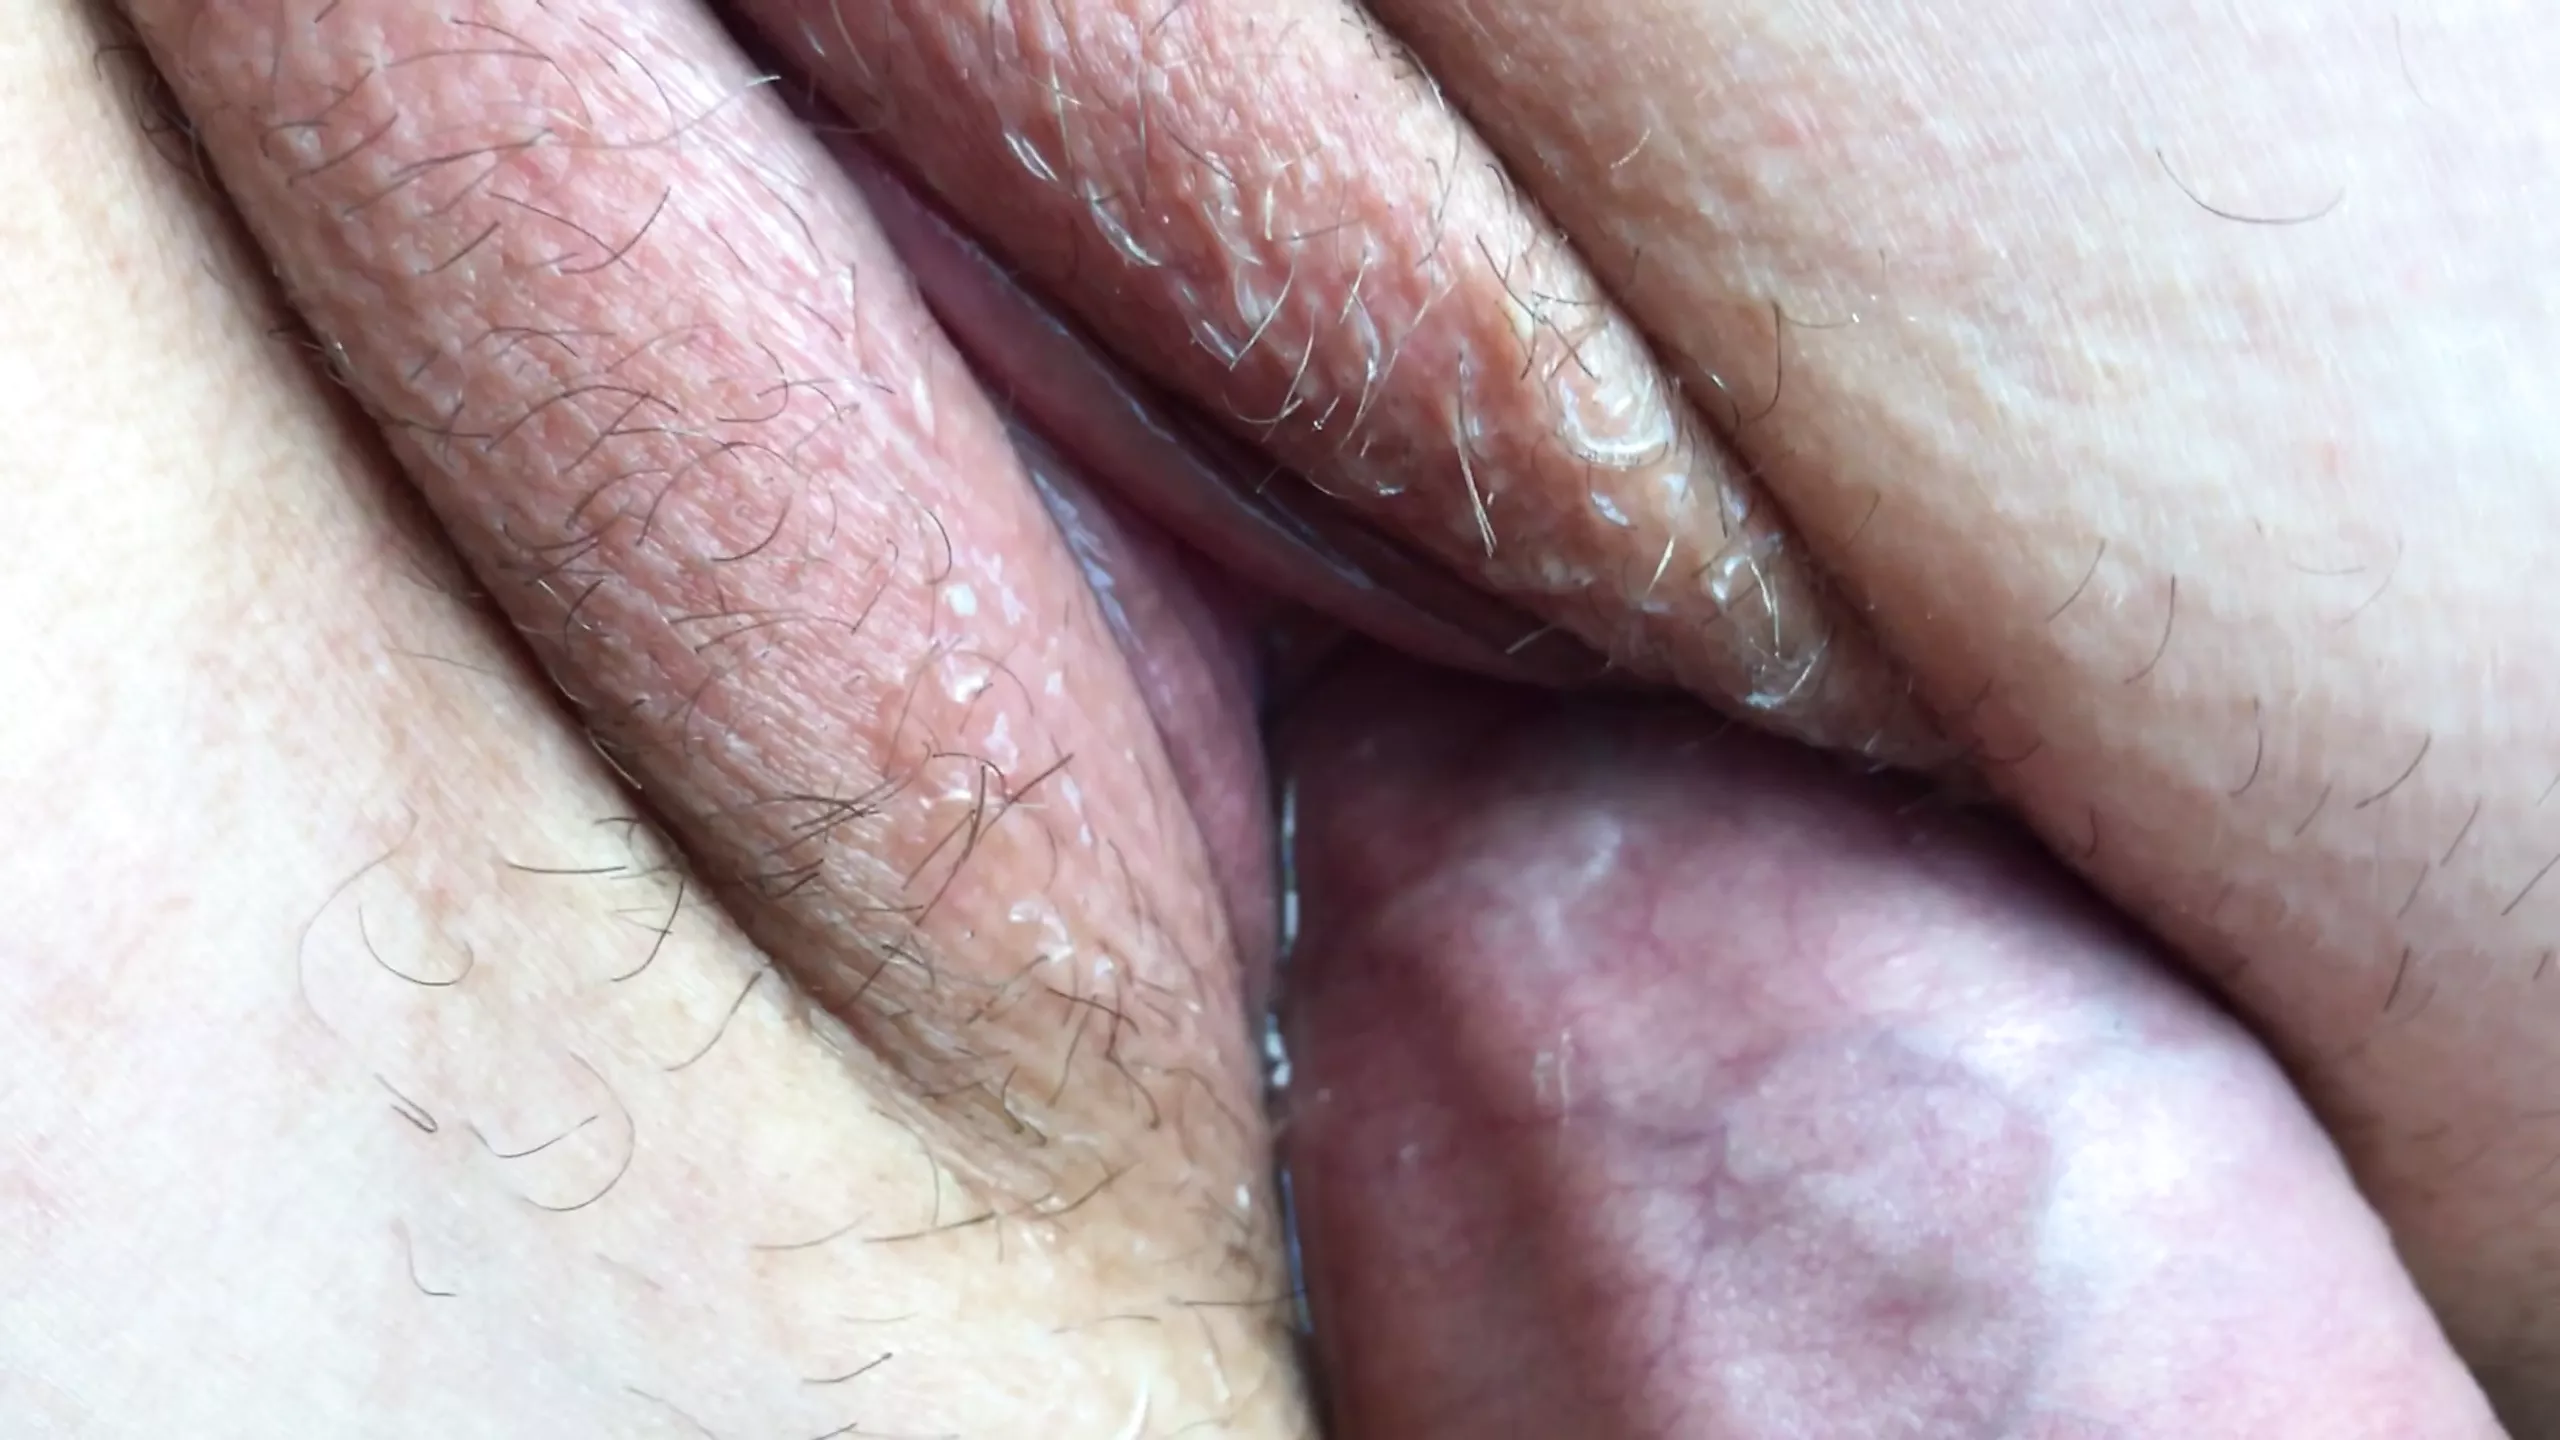 Dick Pissing Inside Vagina Close-up, Free Porn fe xHamster xHamster